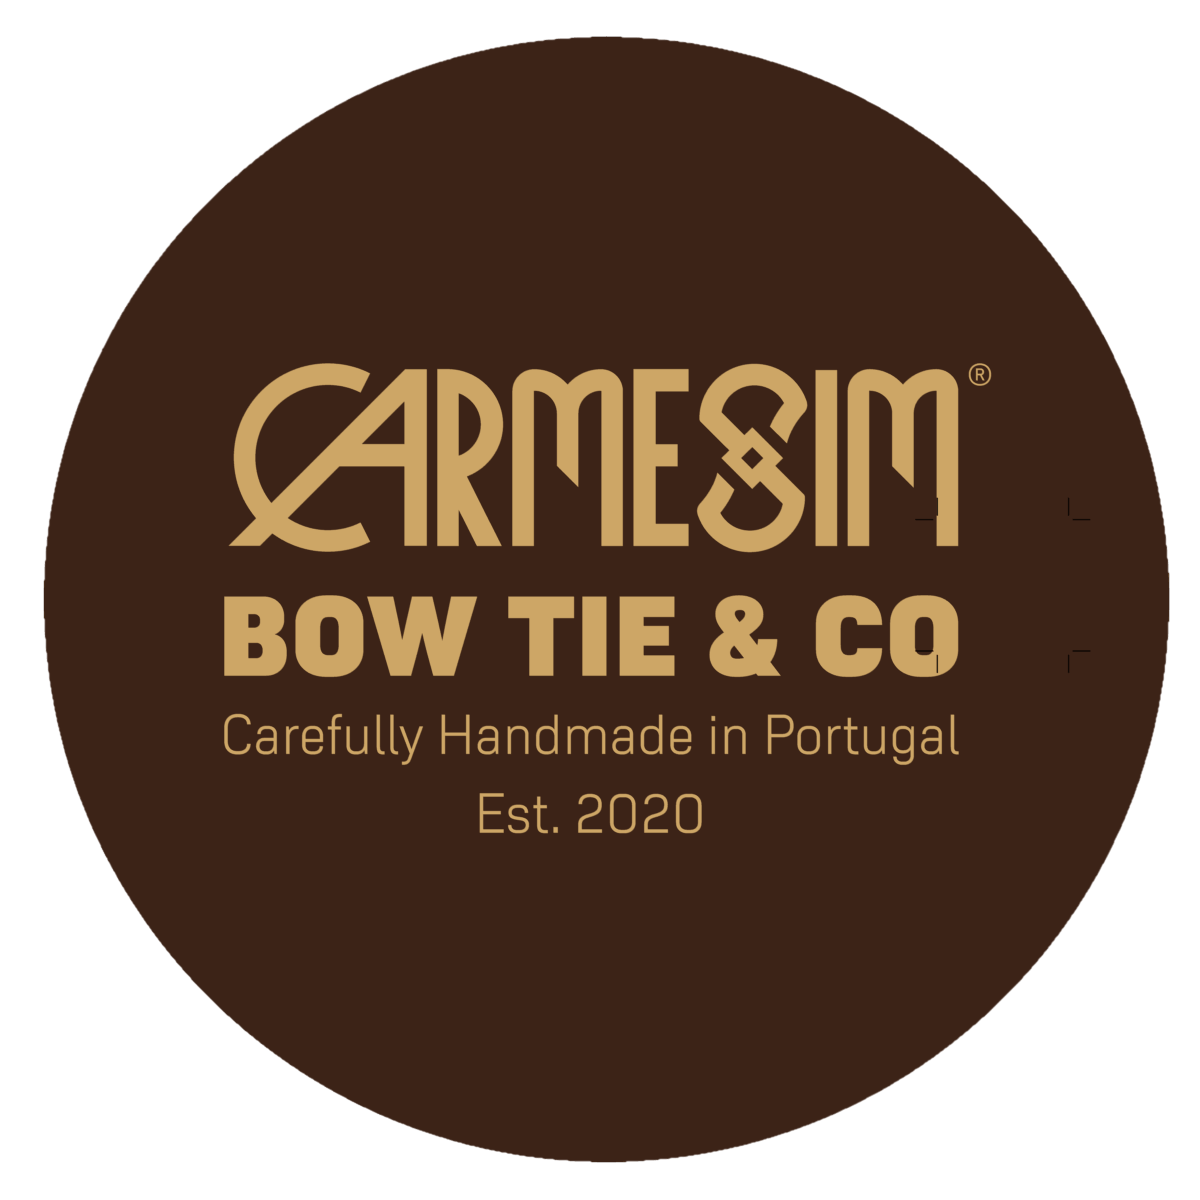 Carmesim Bow Tie